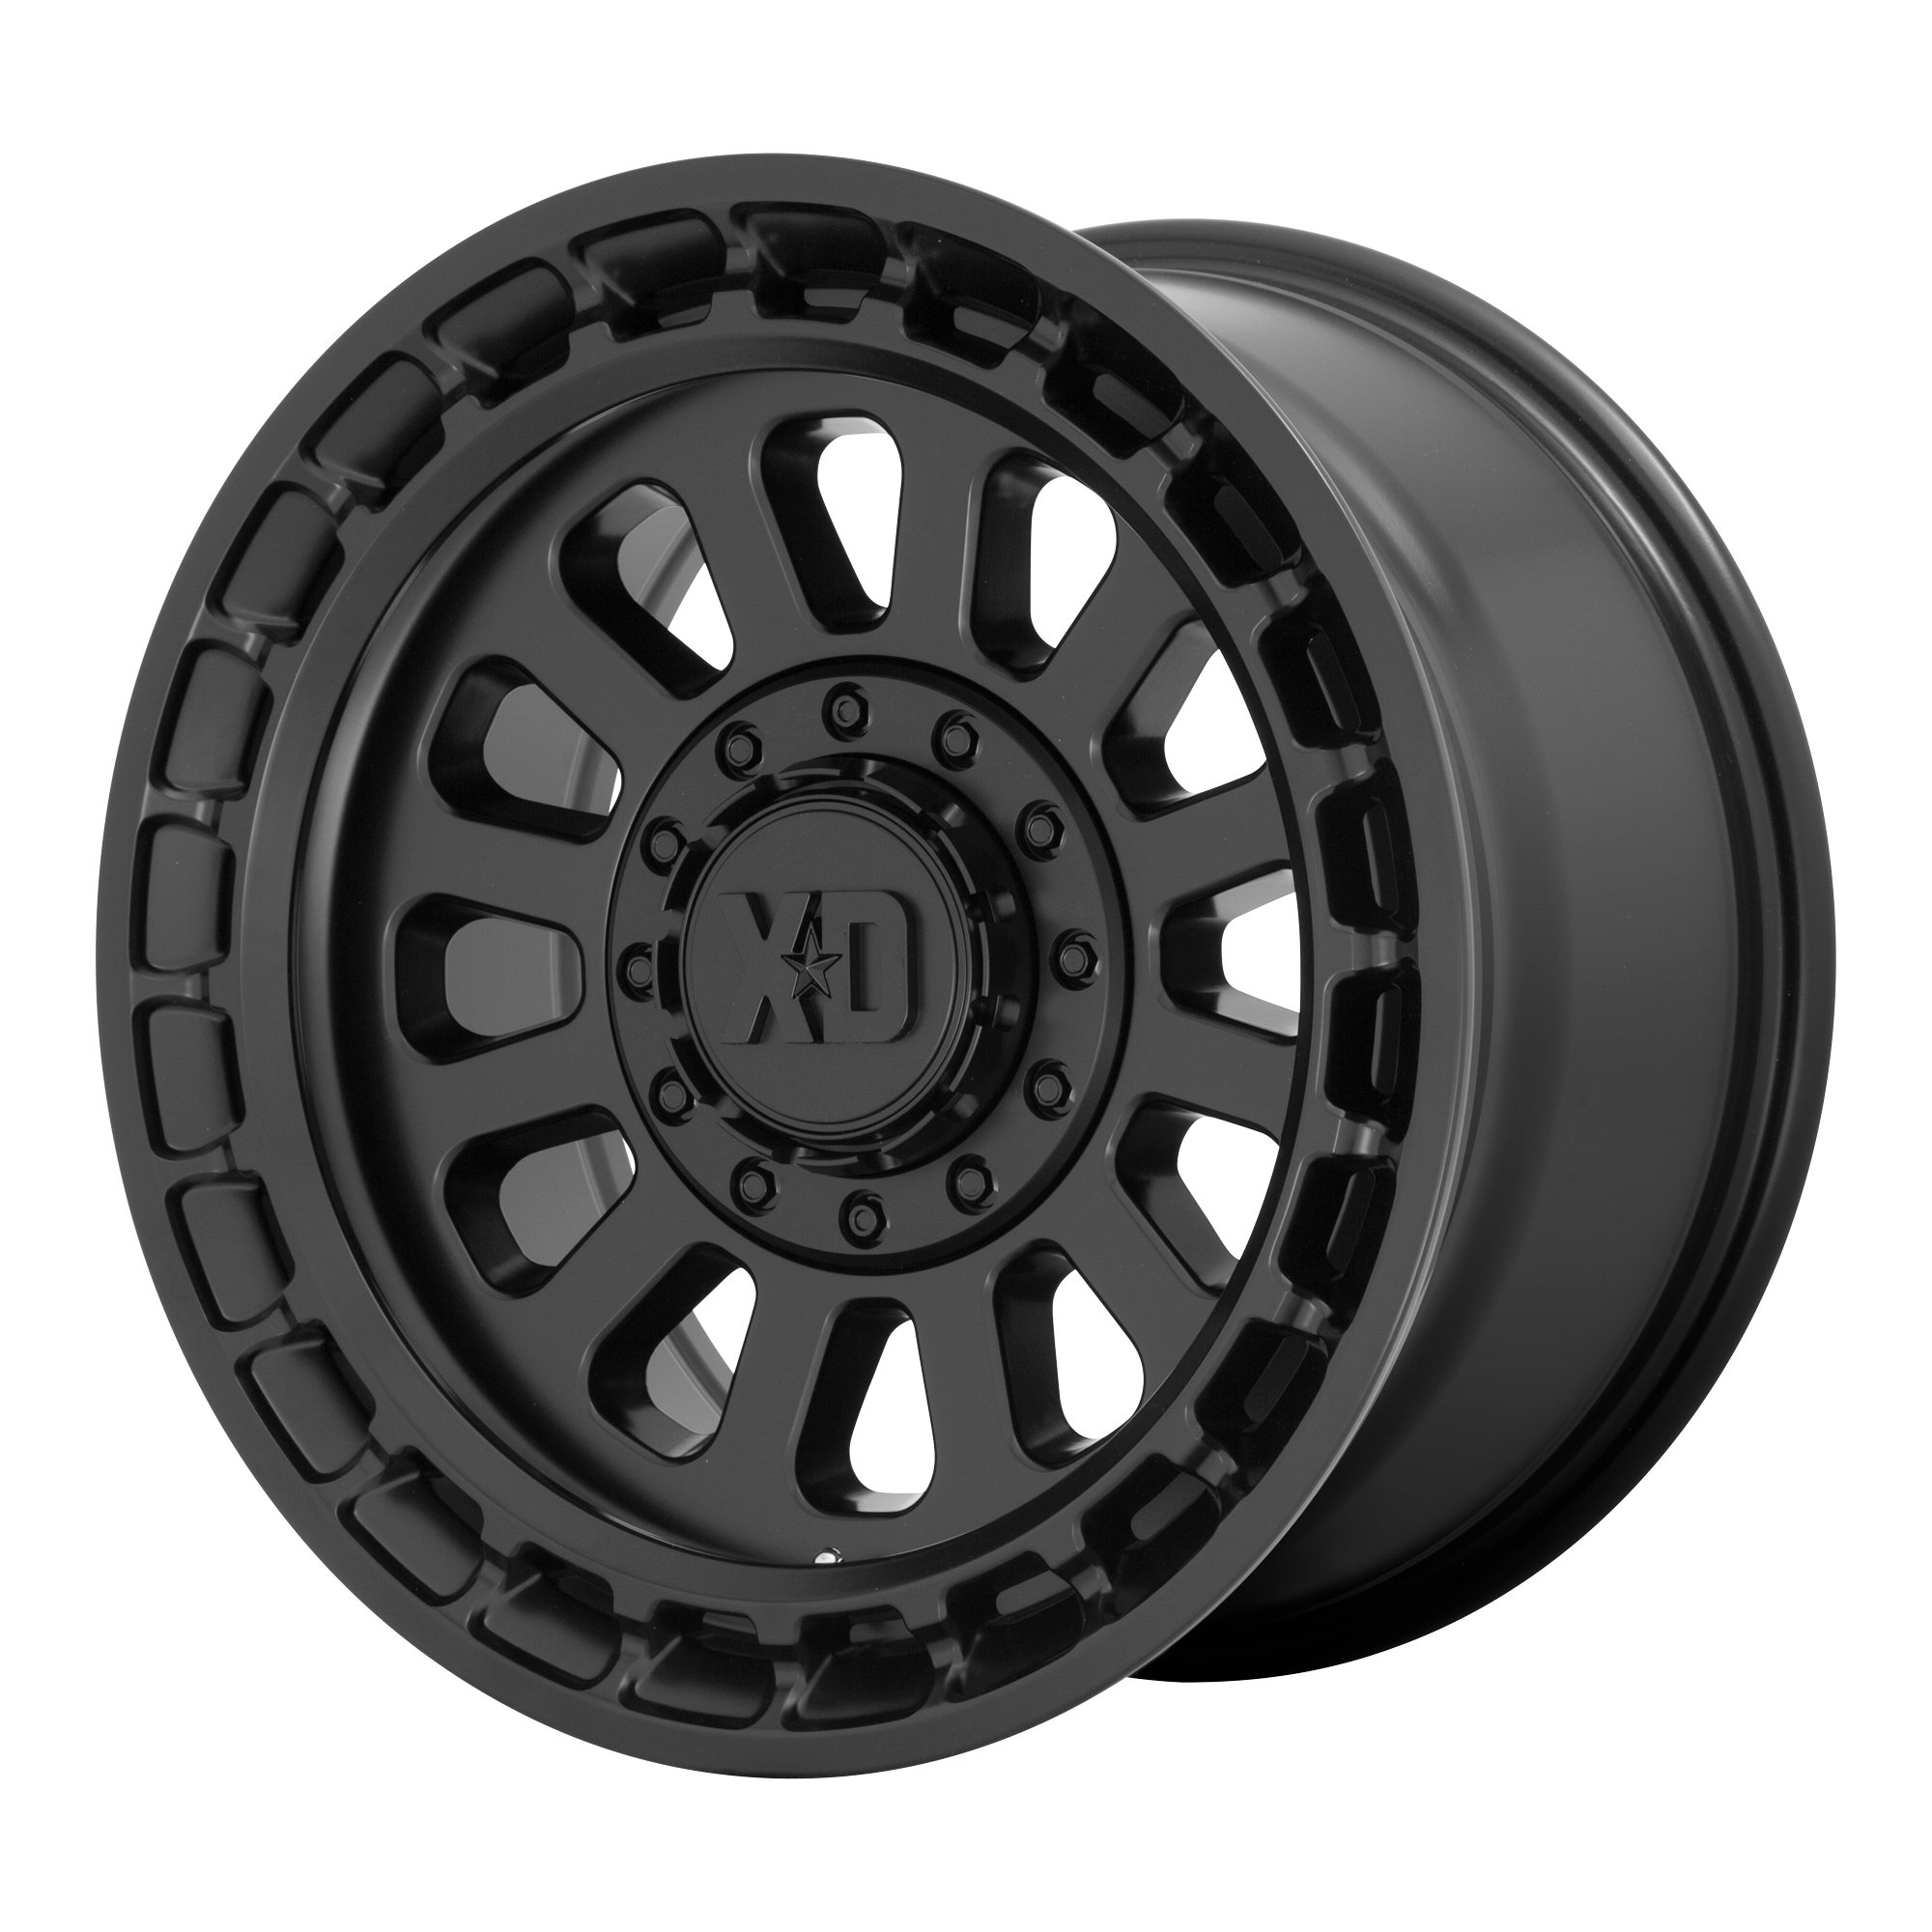 XD 20"x10" Non-Chrome Satin Black Custom Wheel ARSWCWXD85621088718N